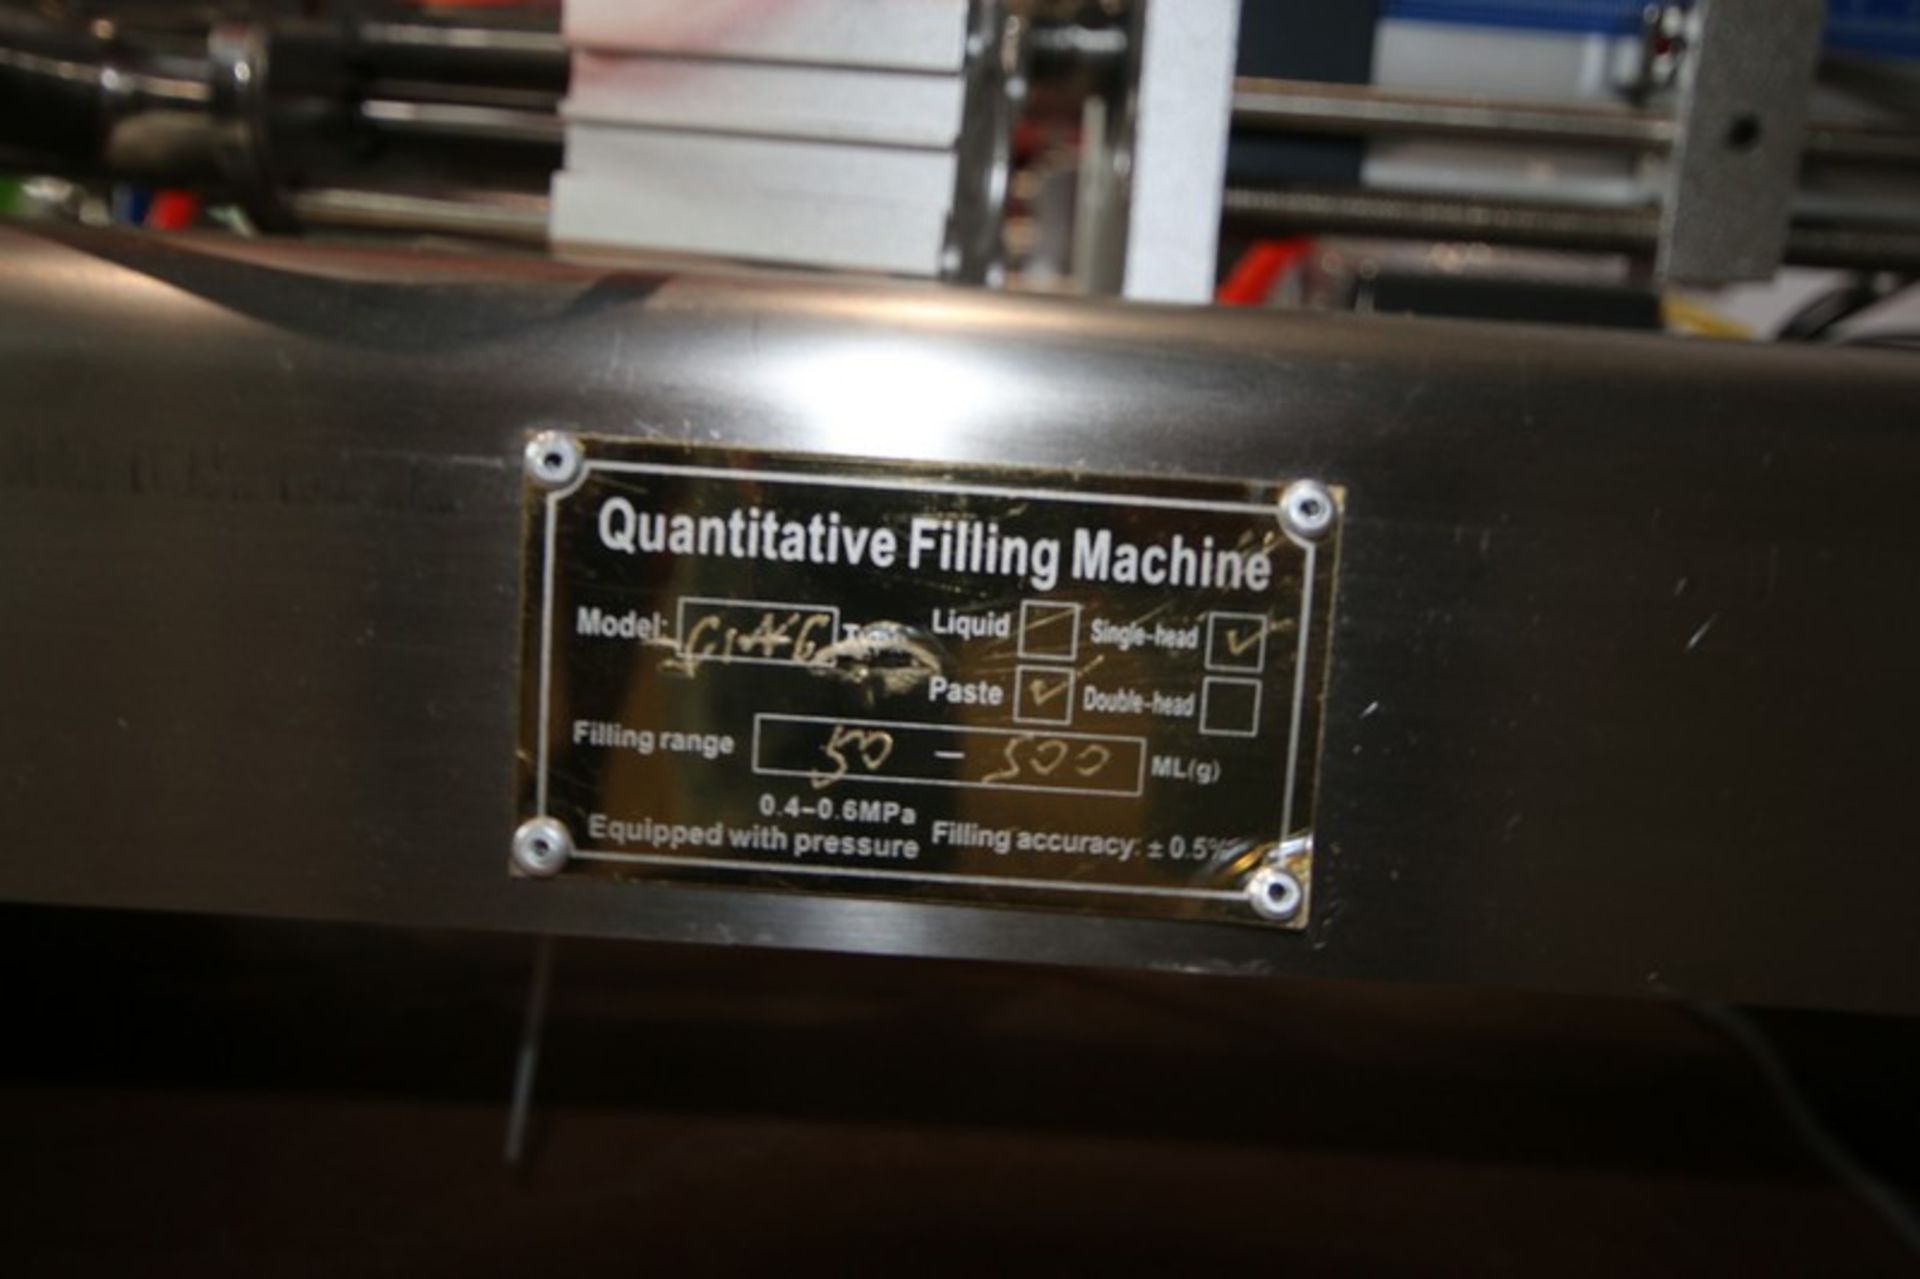 Quantitative Single Piston Filling Machine, M/N G46, Filling Range: 50-500 ML (g), with S/S Infeed - Image 5 of 6